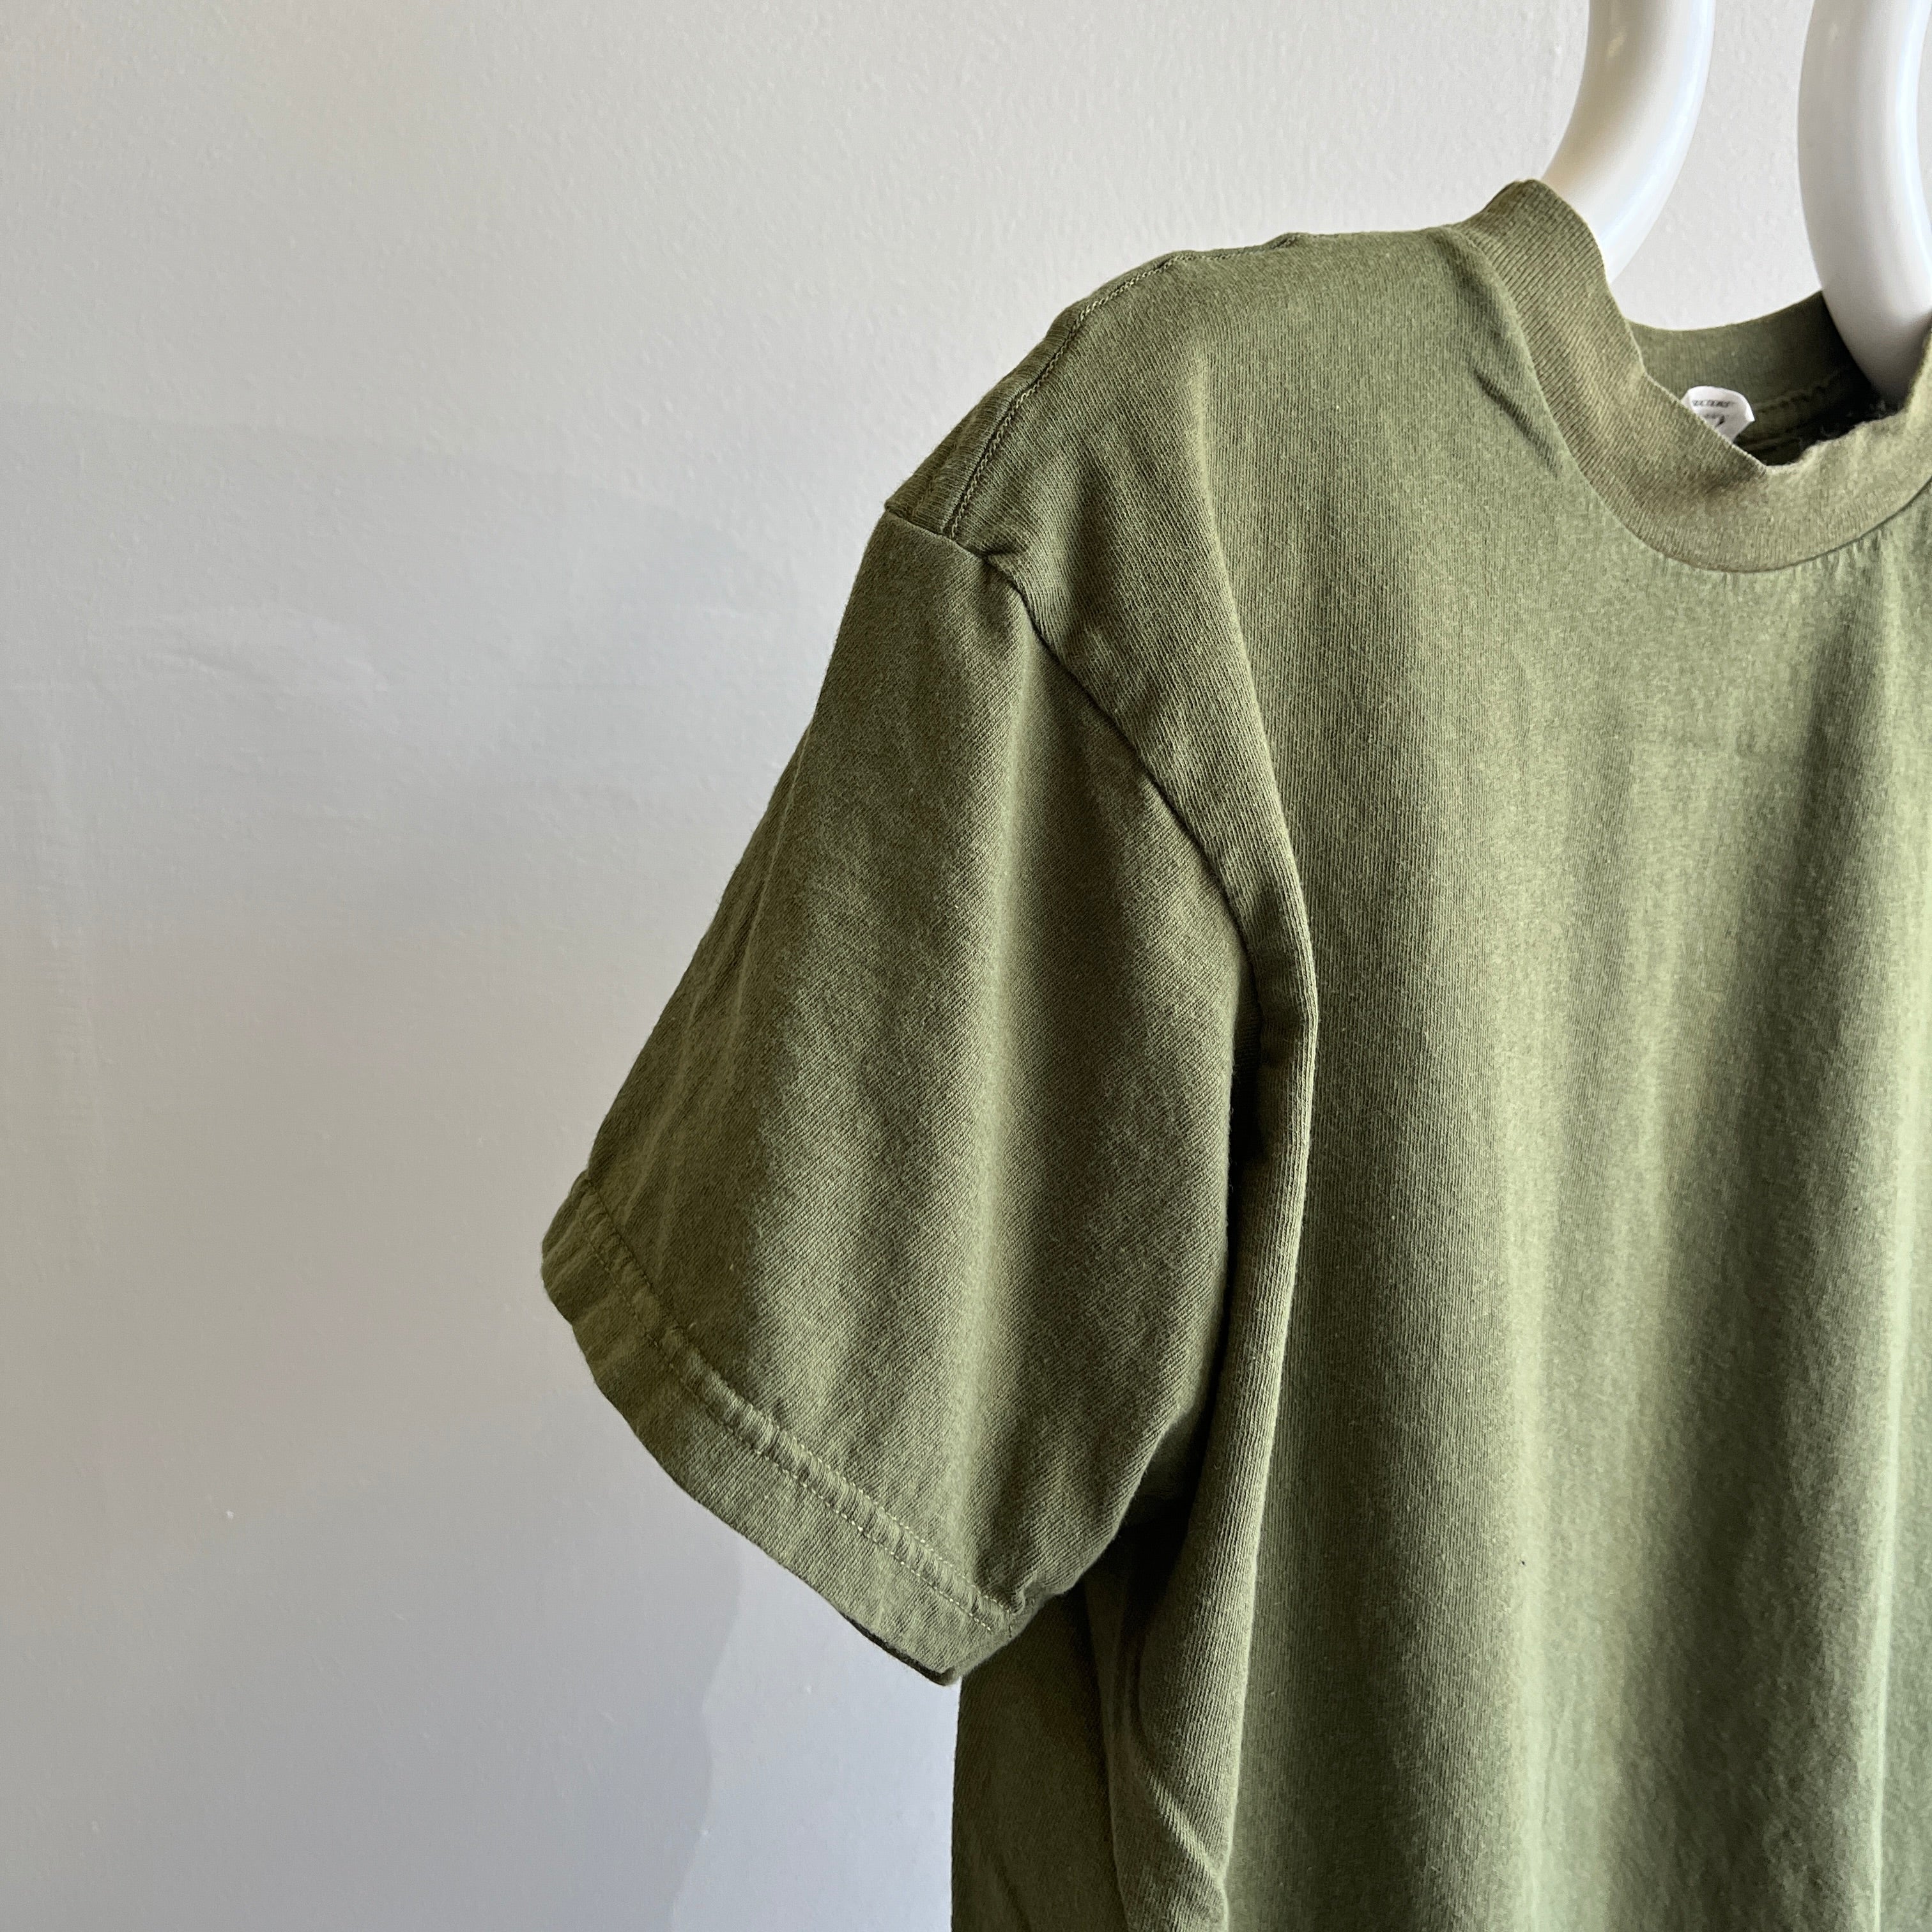 GG - T-shirt vert armée vierge des années 1980